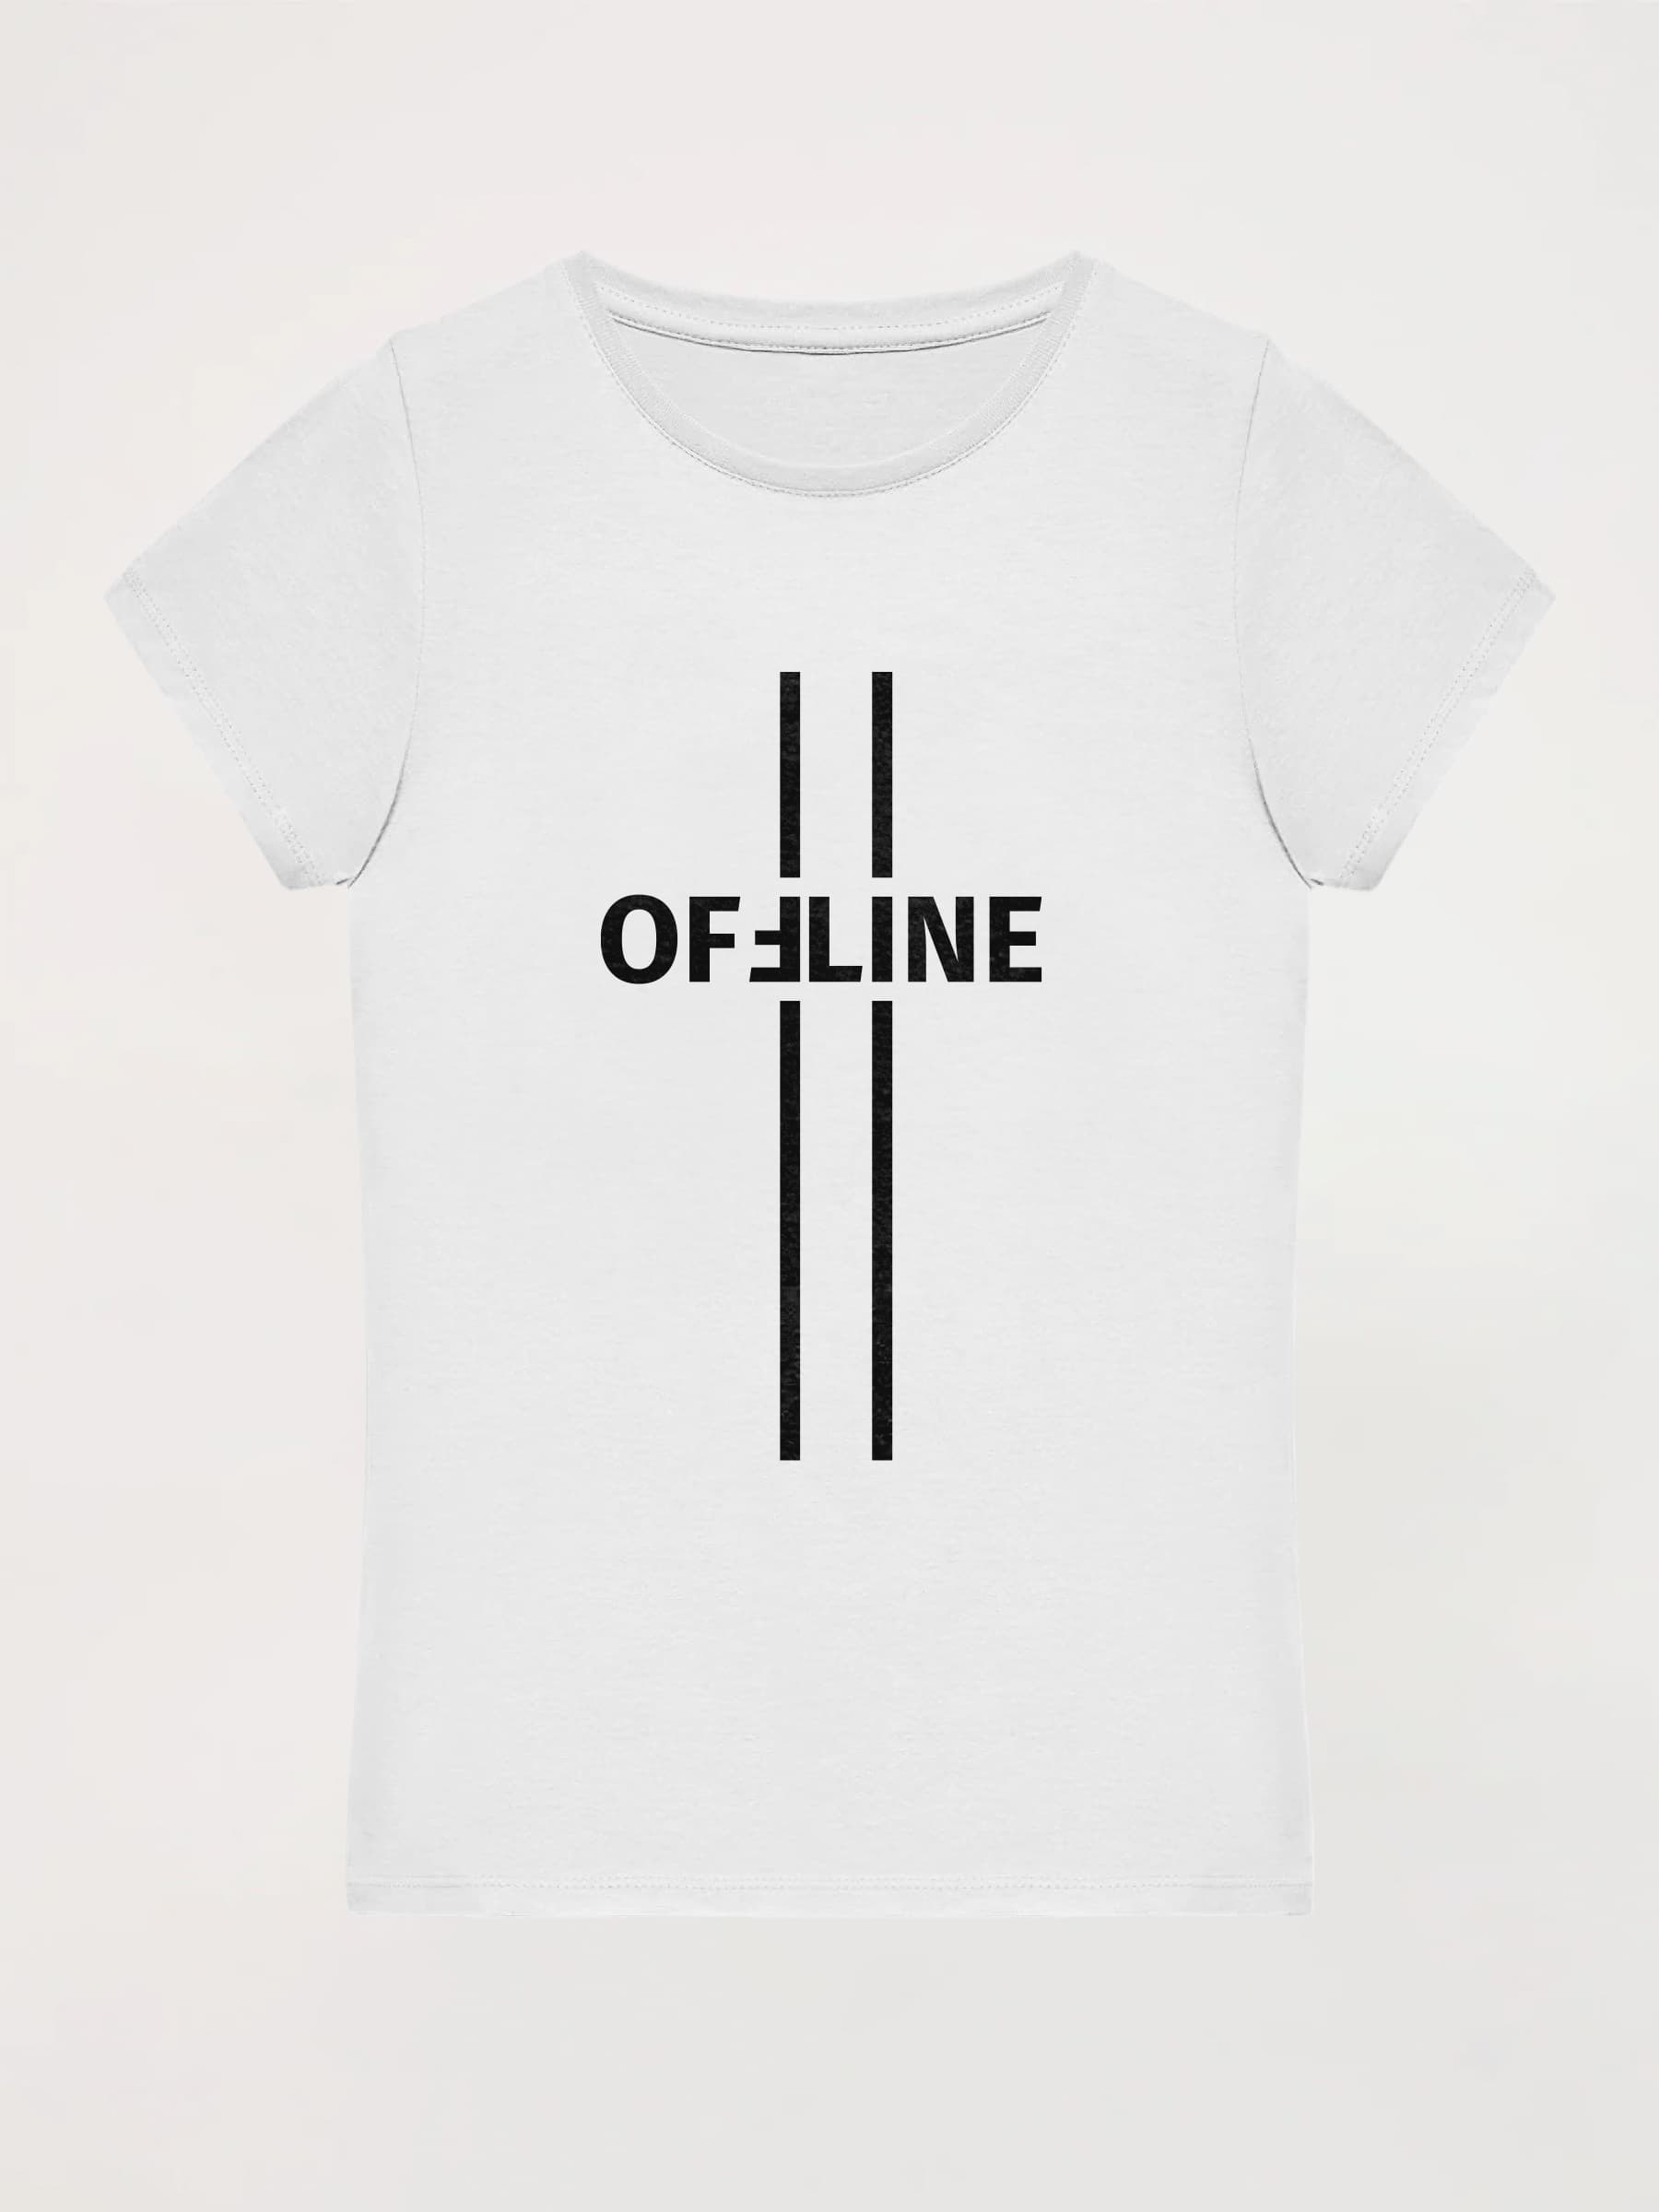 Camiseta mujer Offline